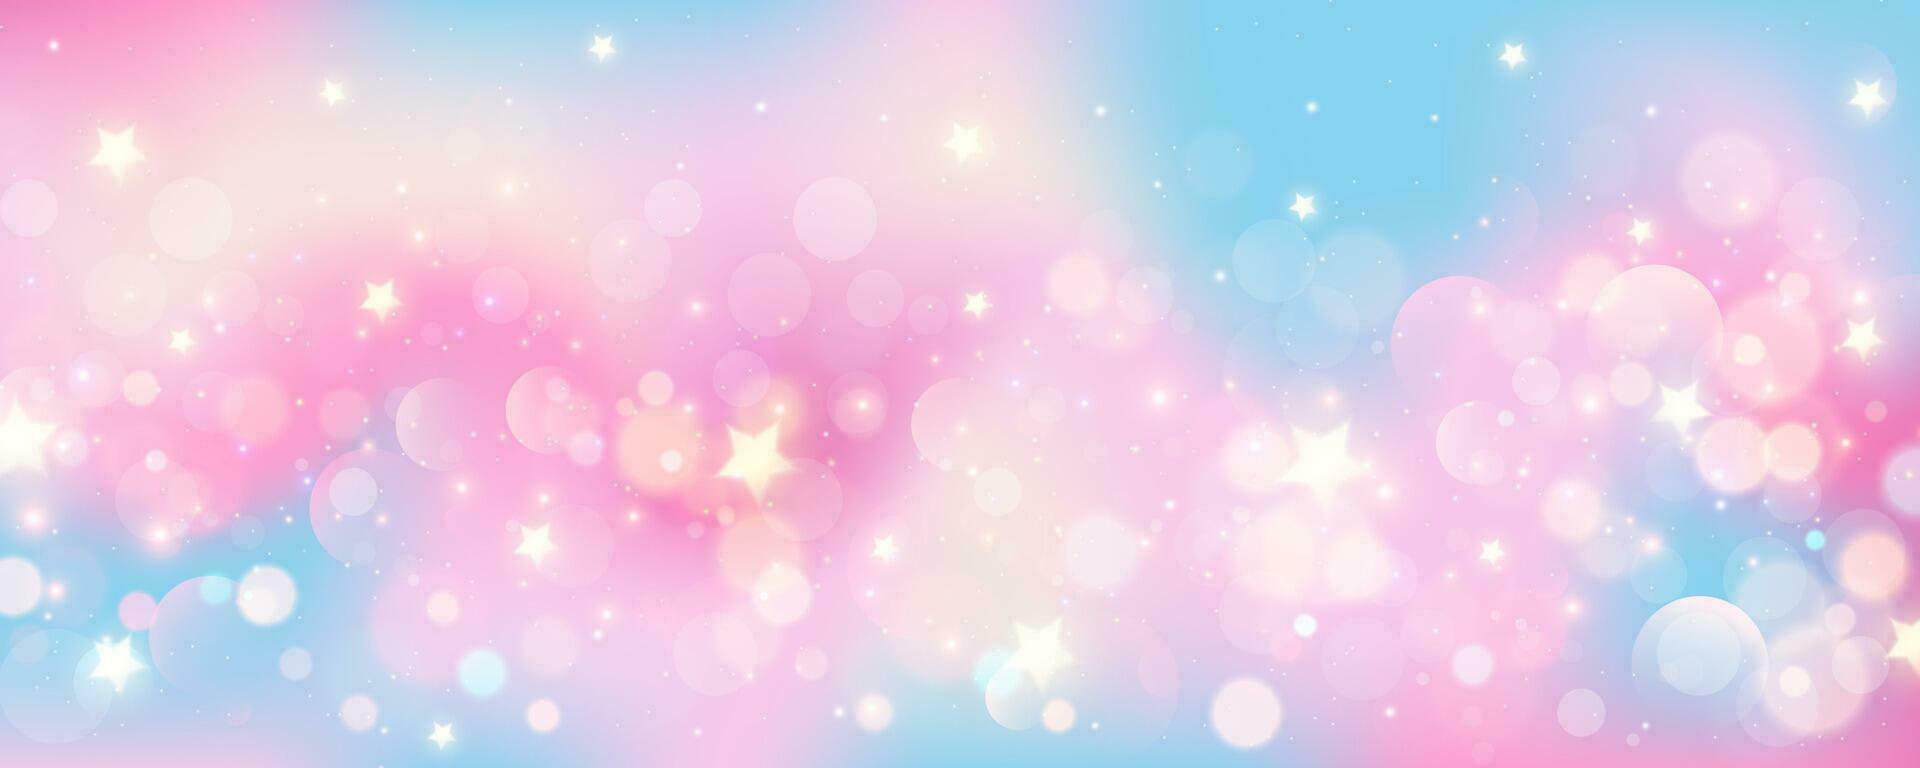 Rosa e azul ondulado fluido fundo com estrelas e bokeh. abstrato luz borrado vetor Projeto. suave rosa céu. pastel gradiente romântico papel de parede